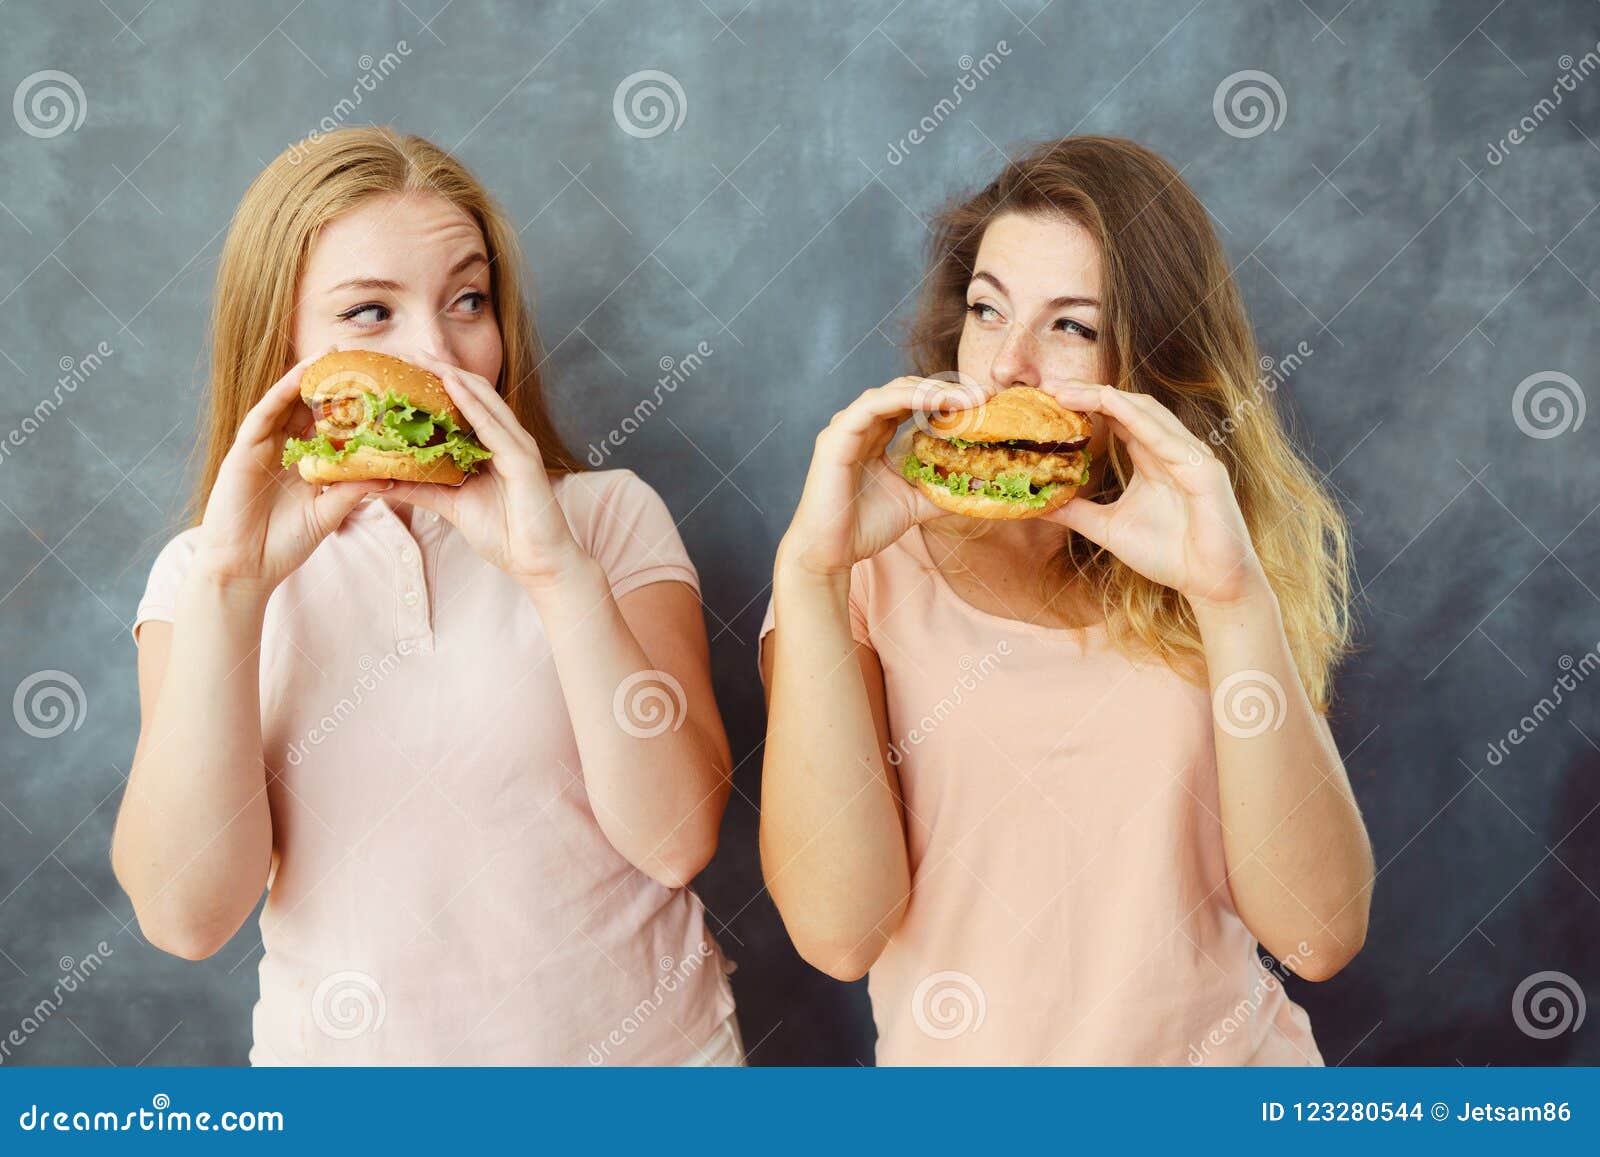 dan zylkowski add photo women eating out other women